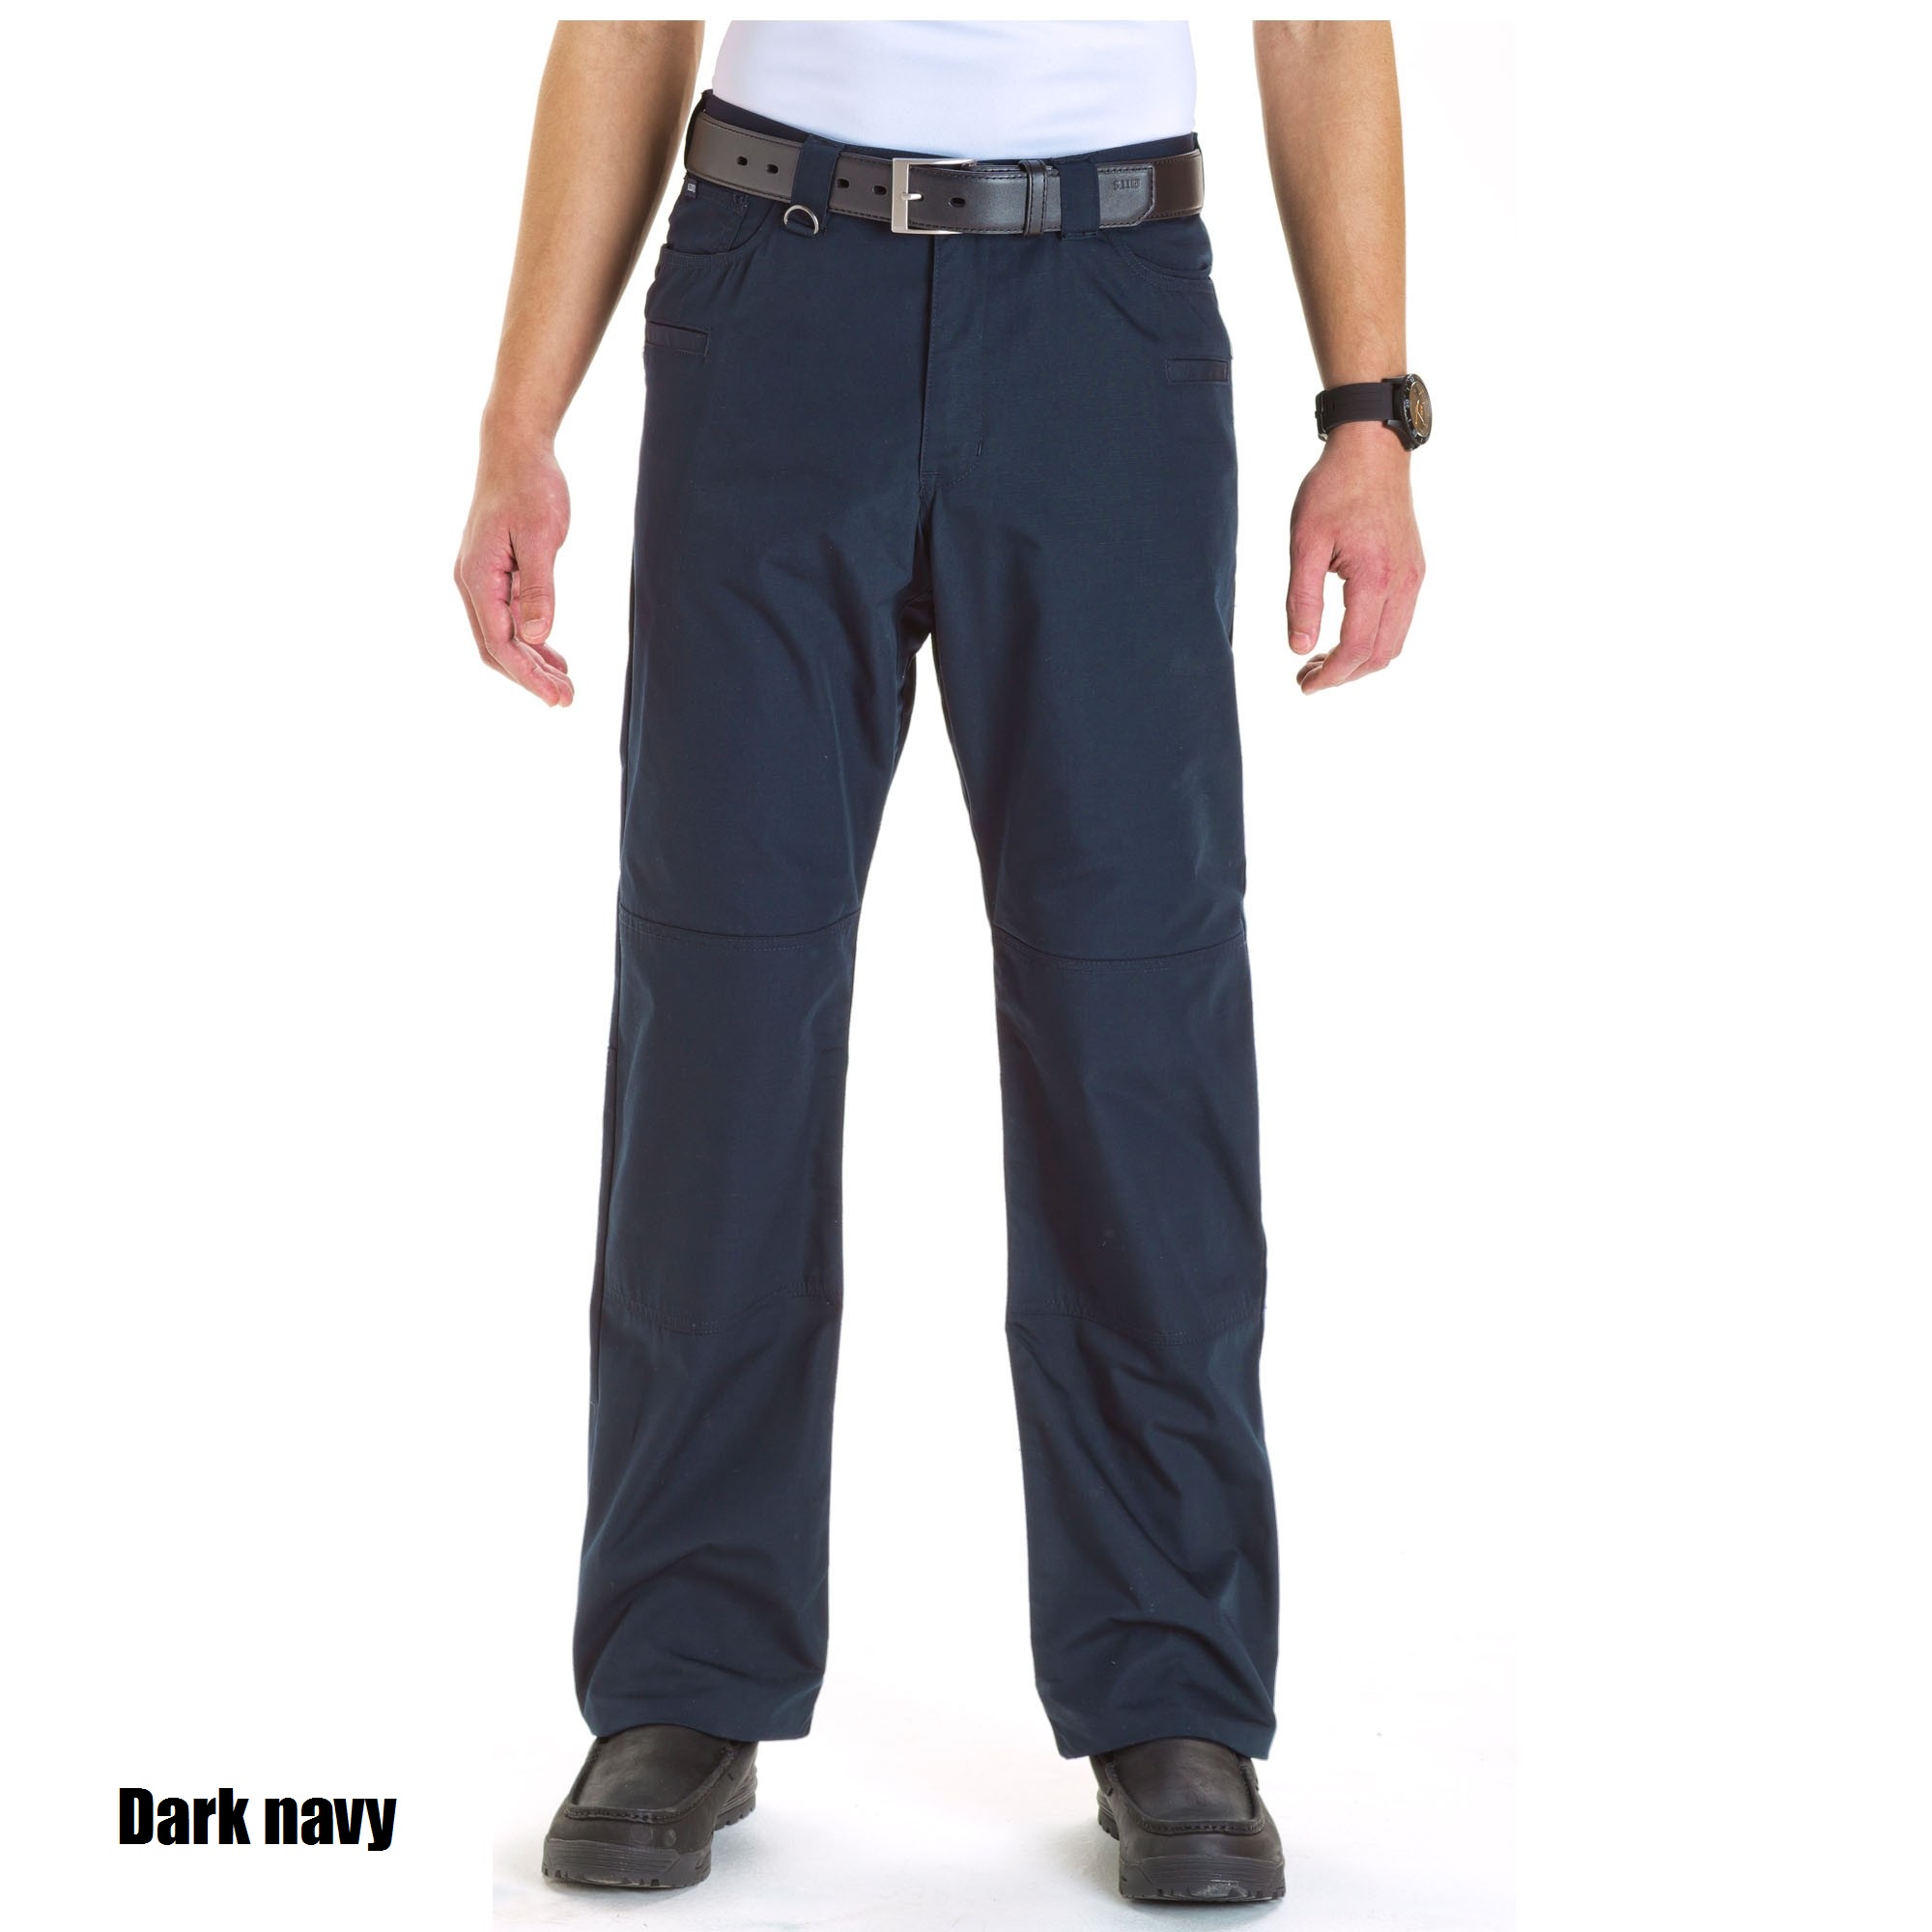 5.11 Taclite Jean-Cut Pants